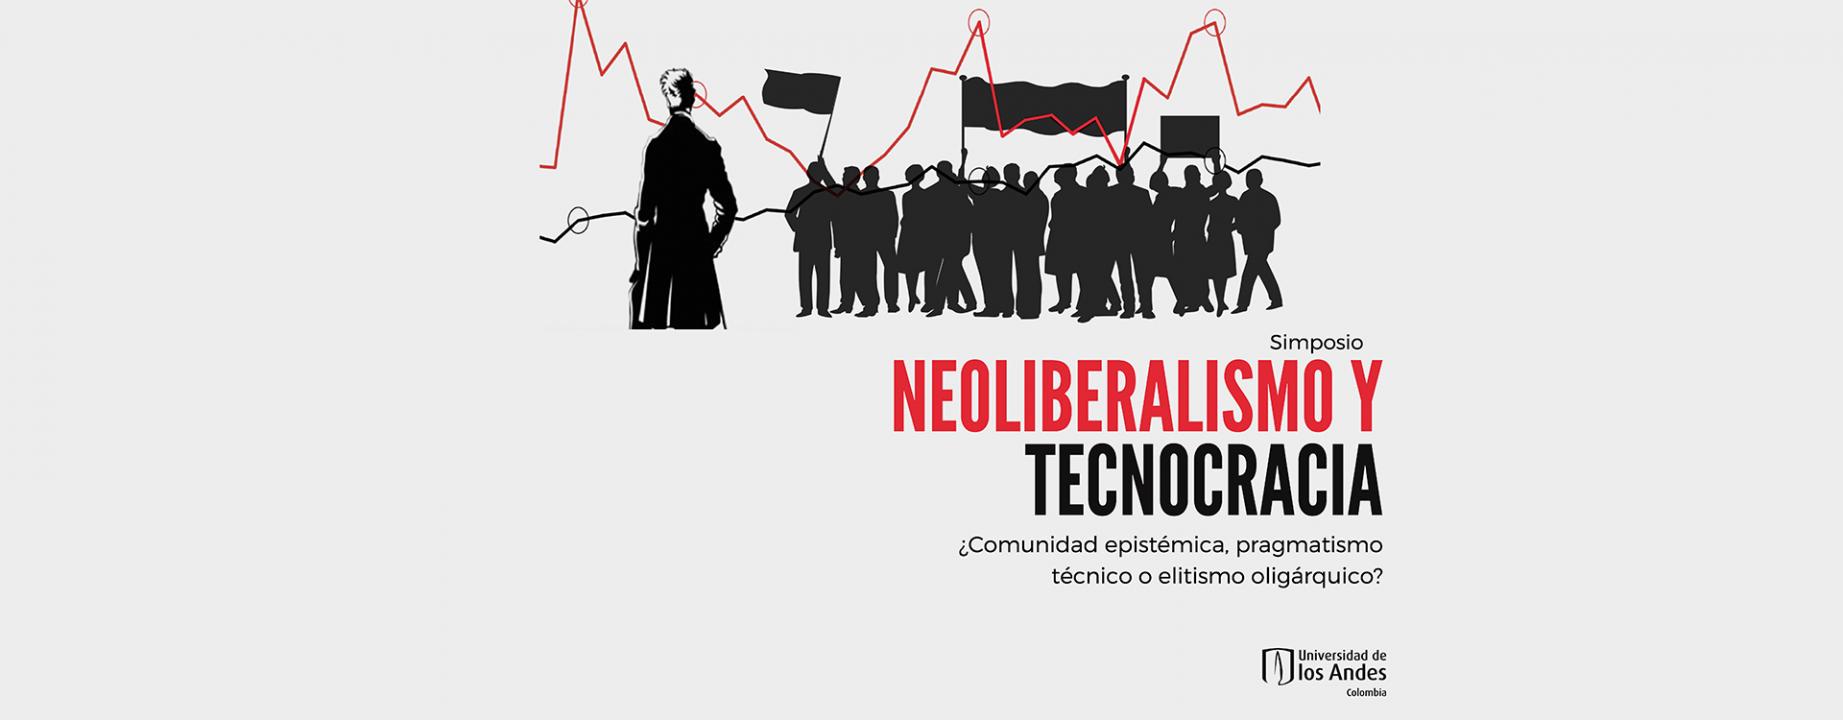 neoliberalismo, facultad de economía, simposio, eventos